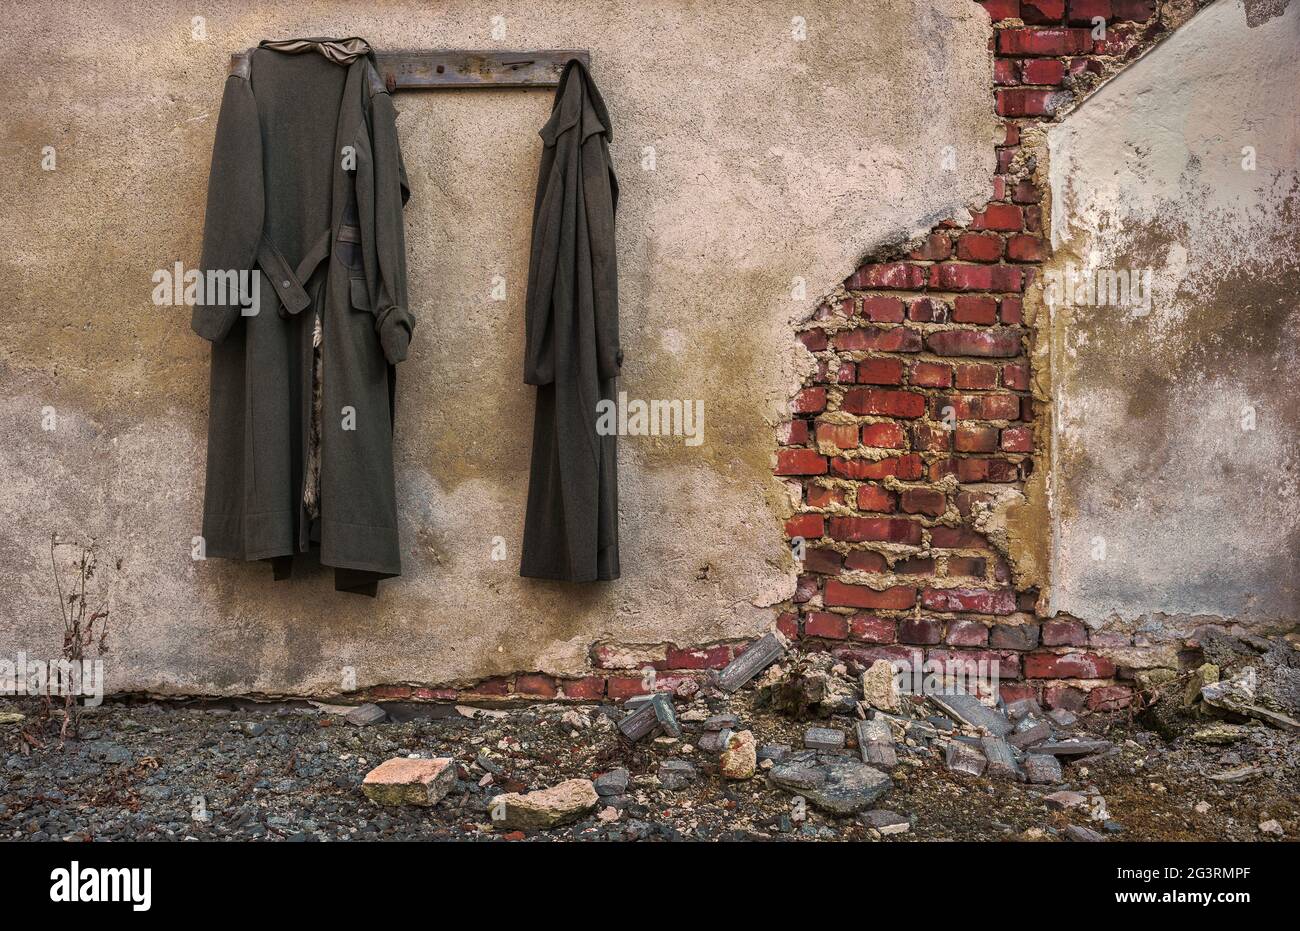 The wardrobe at the old wall Stock Photo